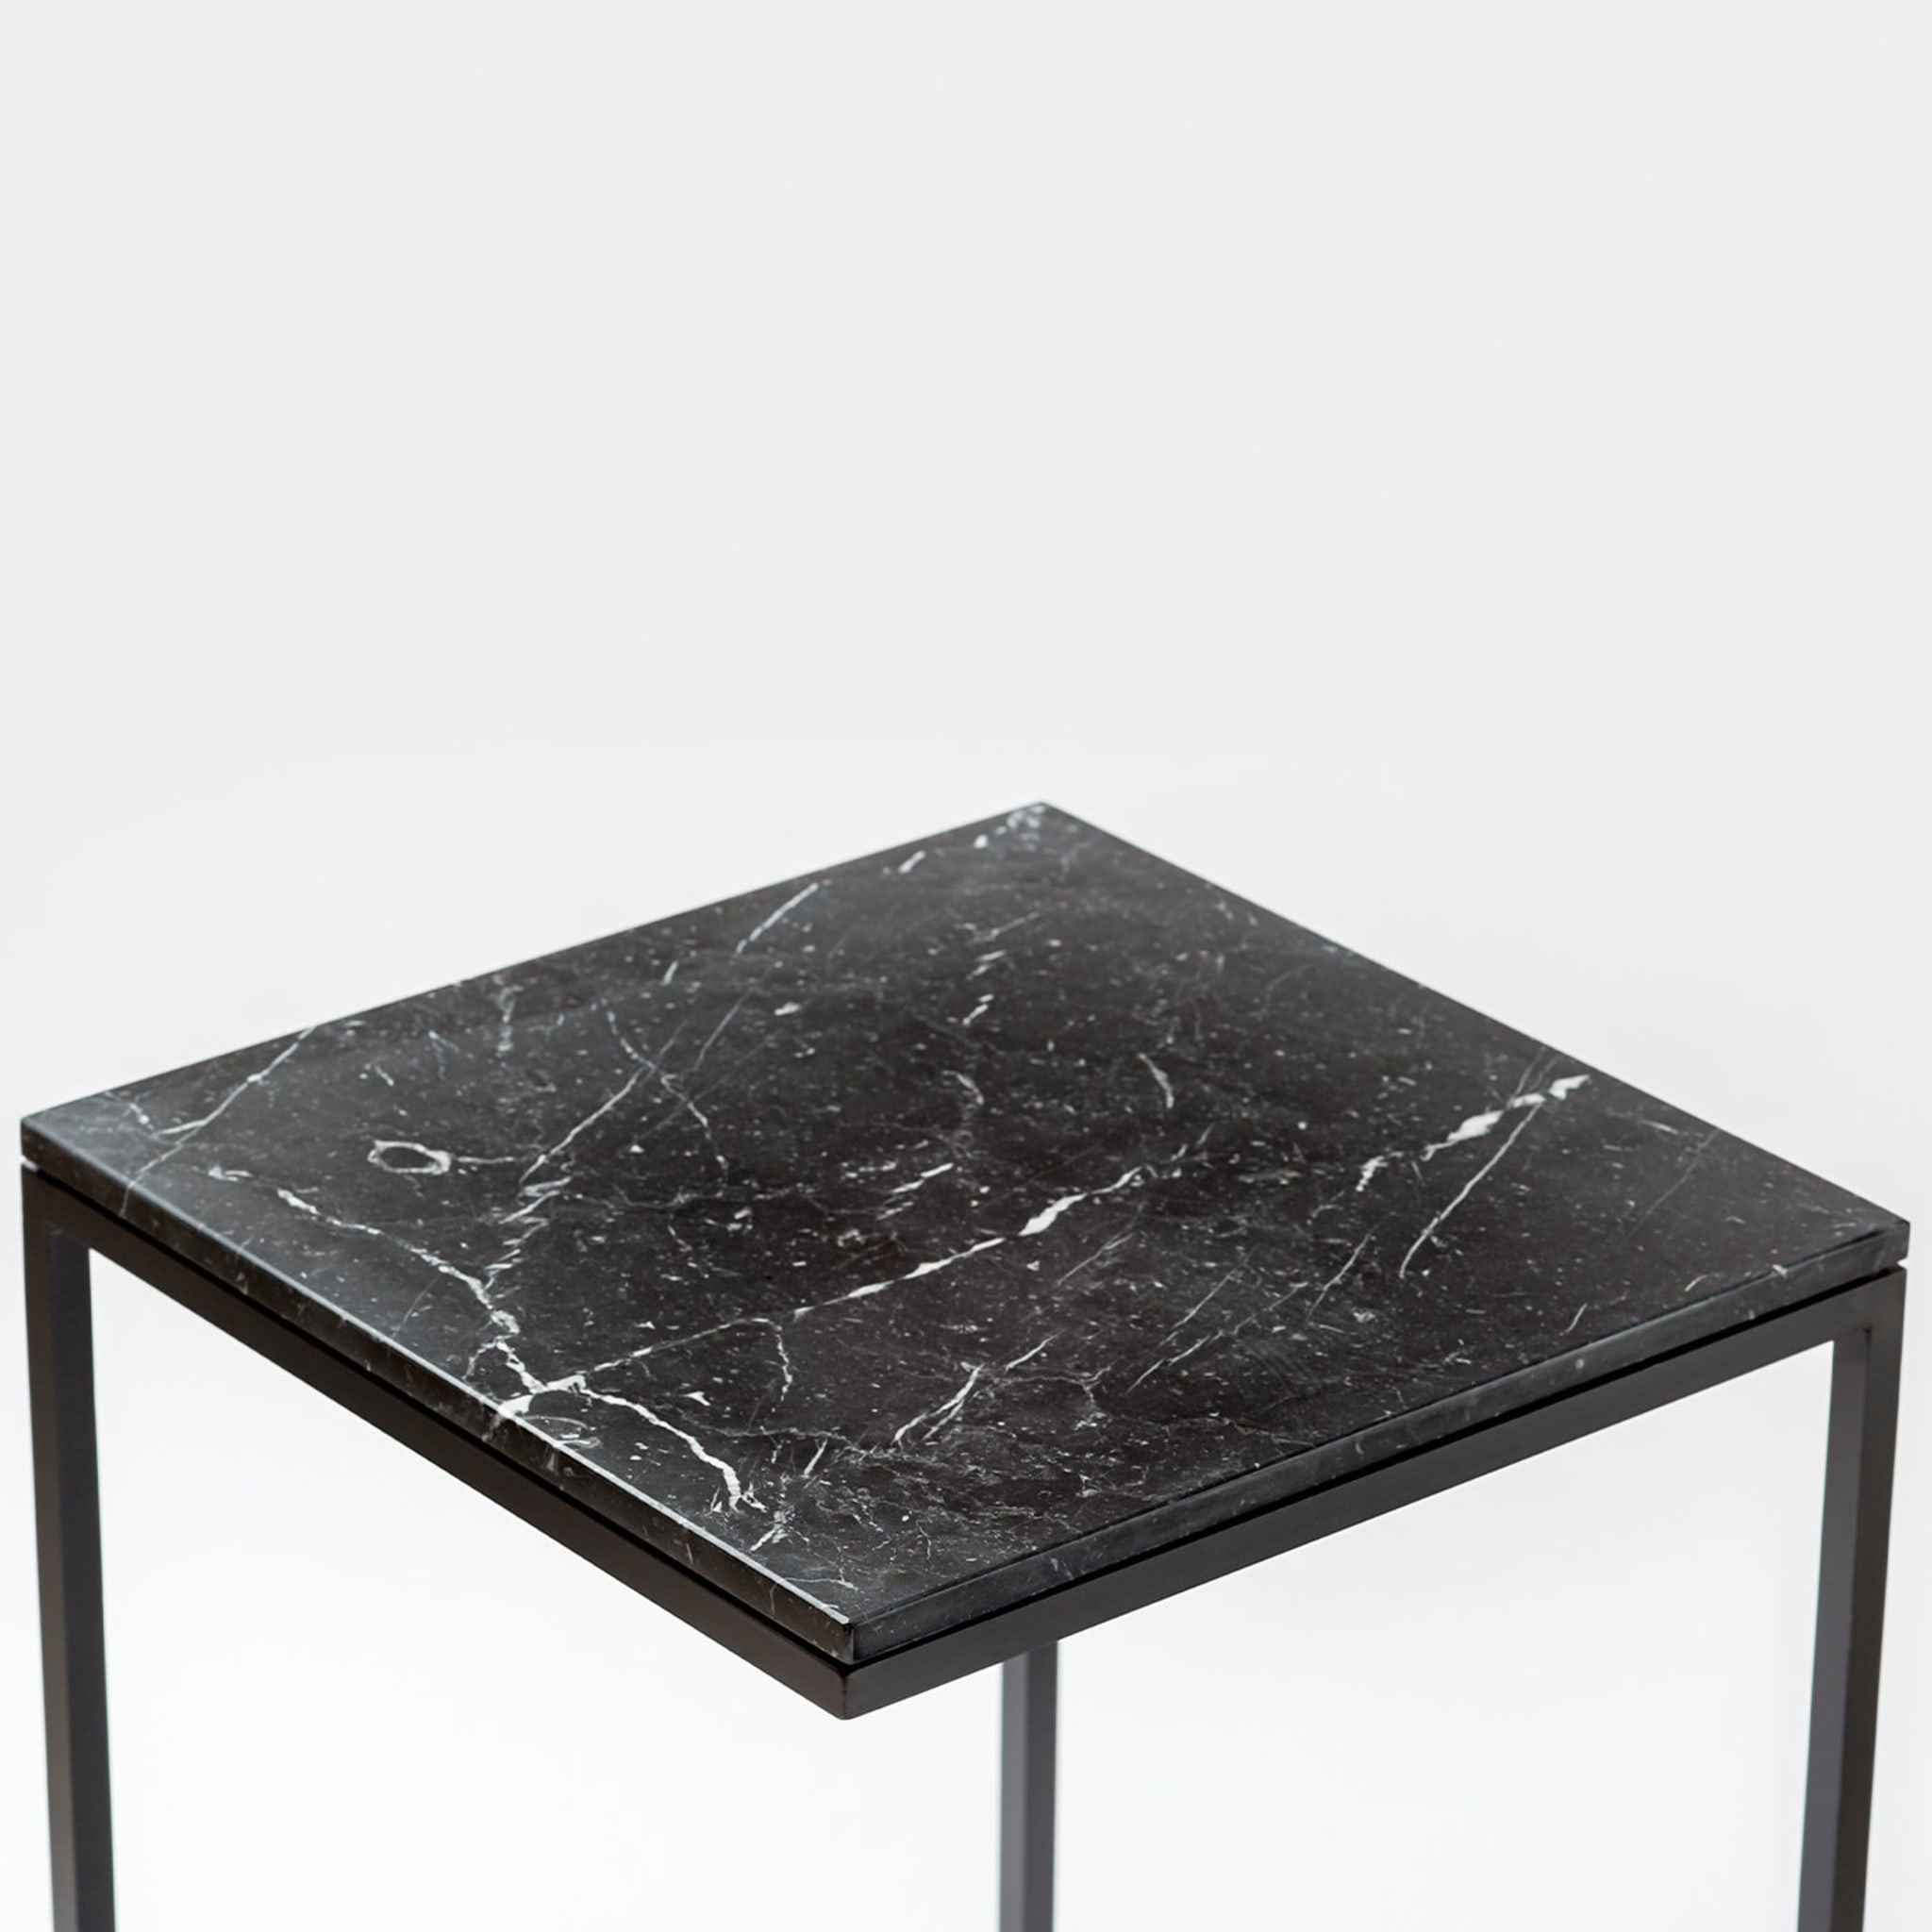 Esopo Black Side Table by Antonio Saporito - Alternative view 1